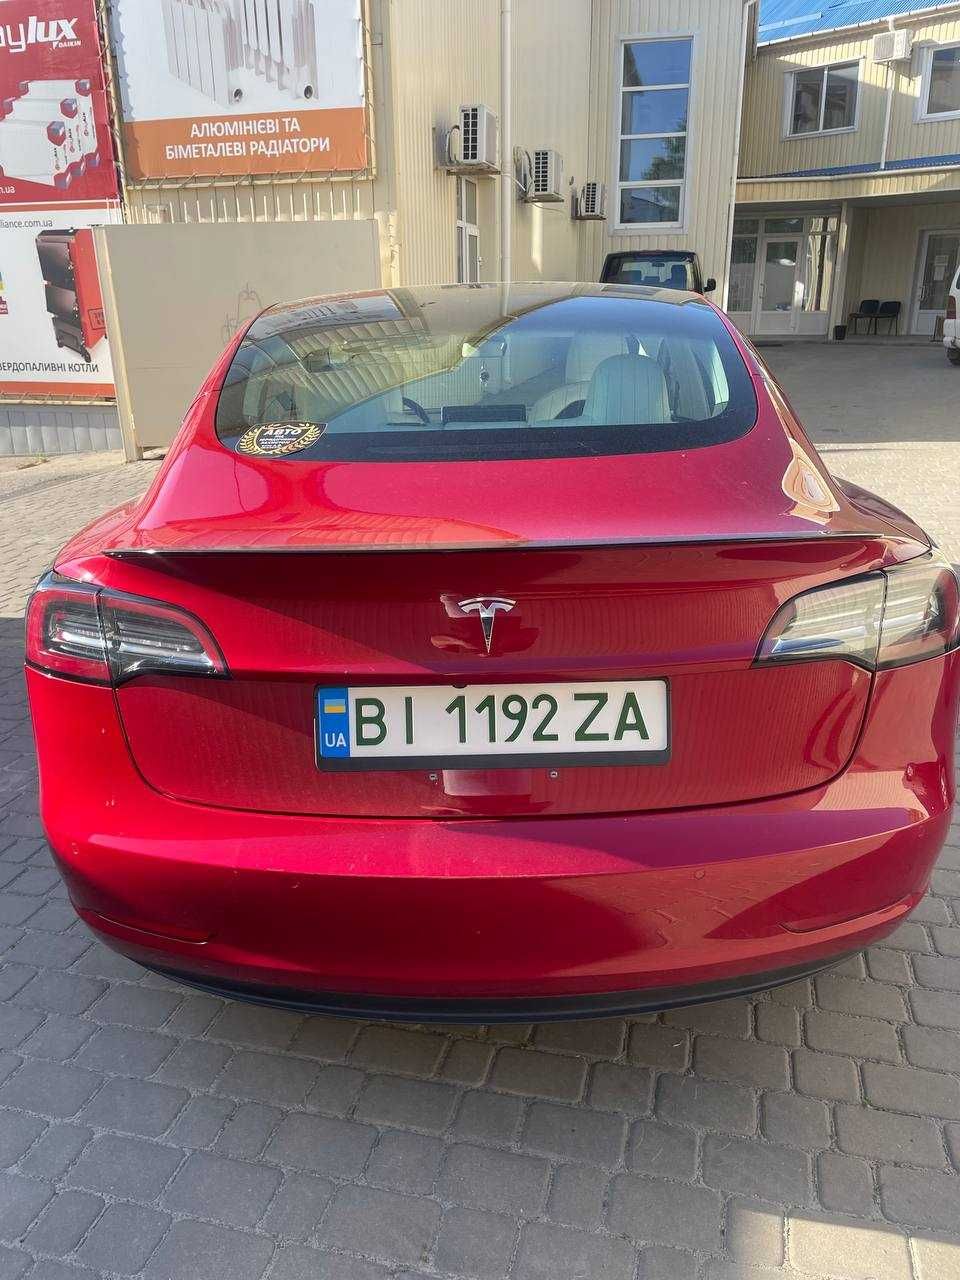 Tesla model 3, dual motor, long range